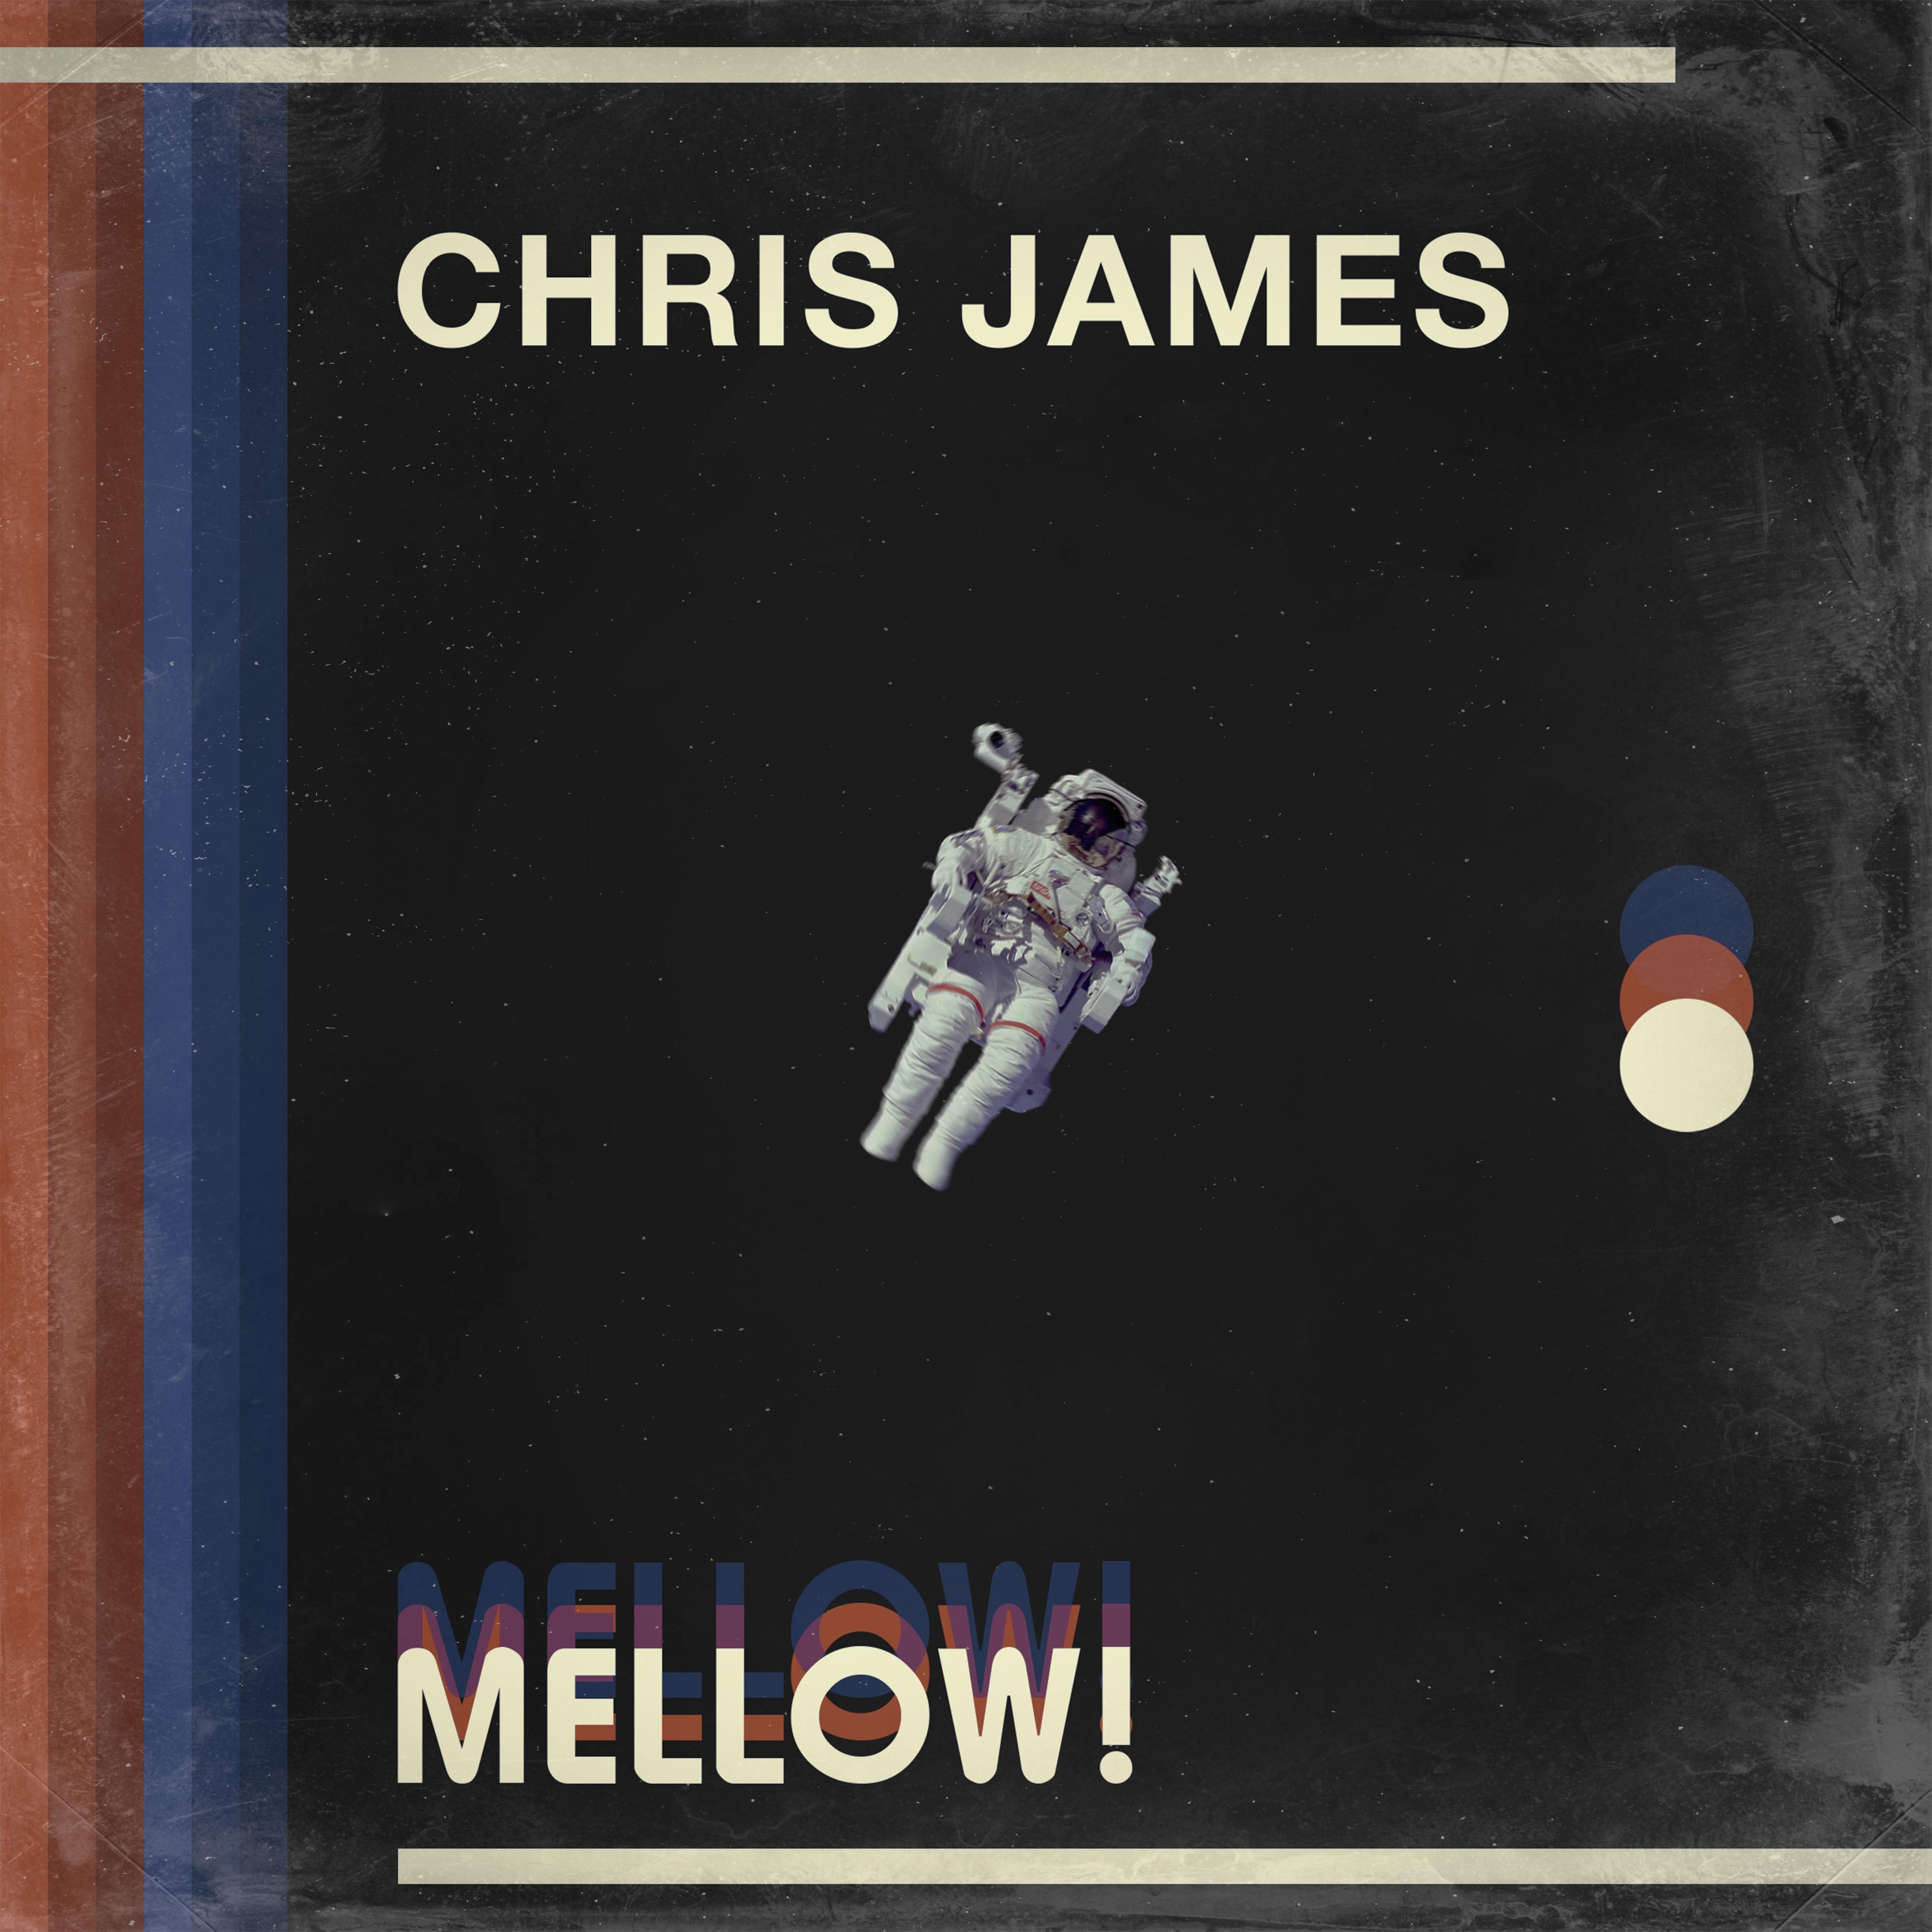 Make the Move歌词 歌手Chris James-专辑MELLOW!-单曲《Make the Move》LRC歌词下载